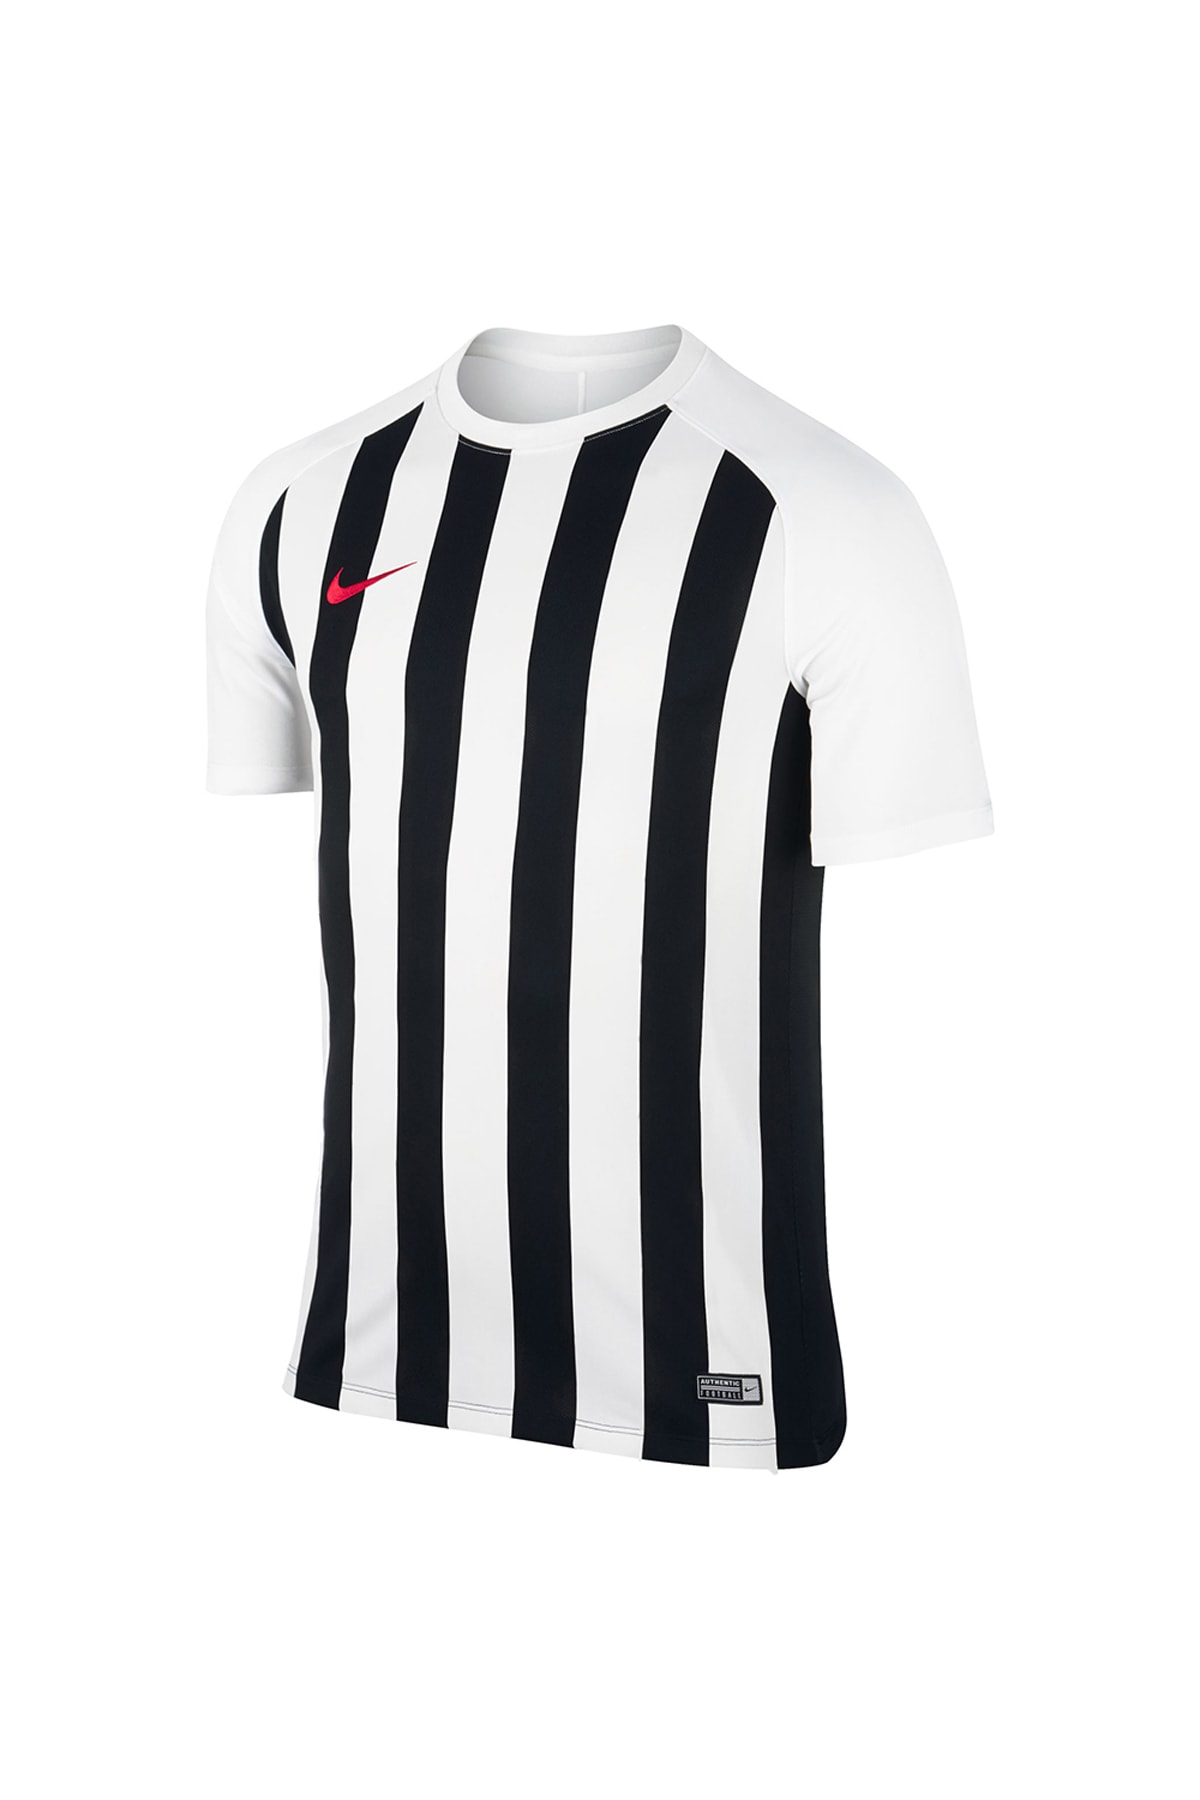 Nike 832976-100 Striped Segment III Kısa Kol Futbol Forma